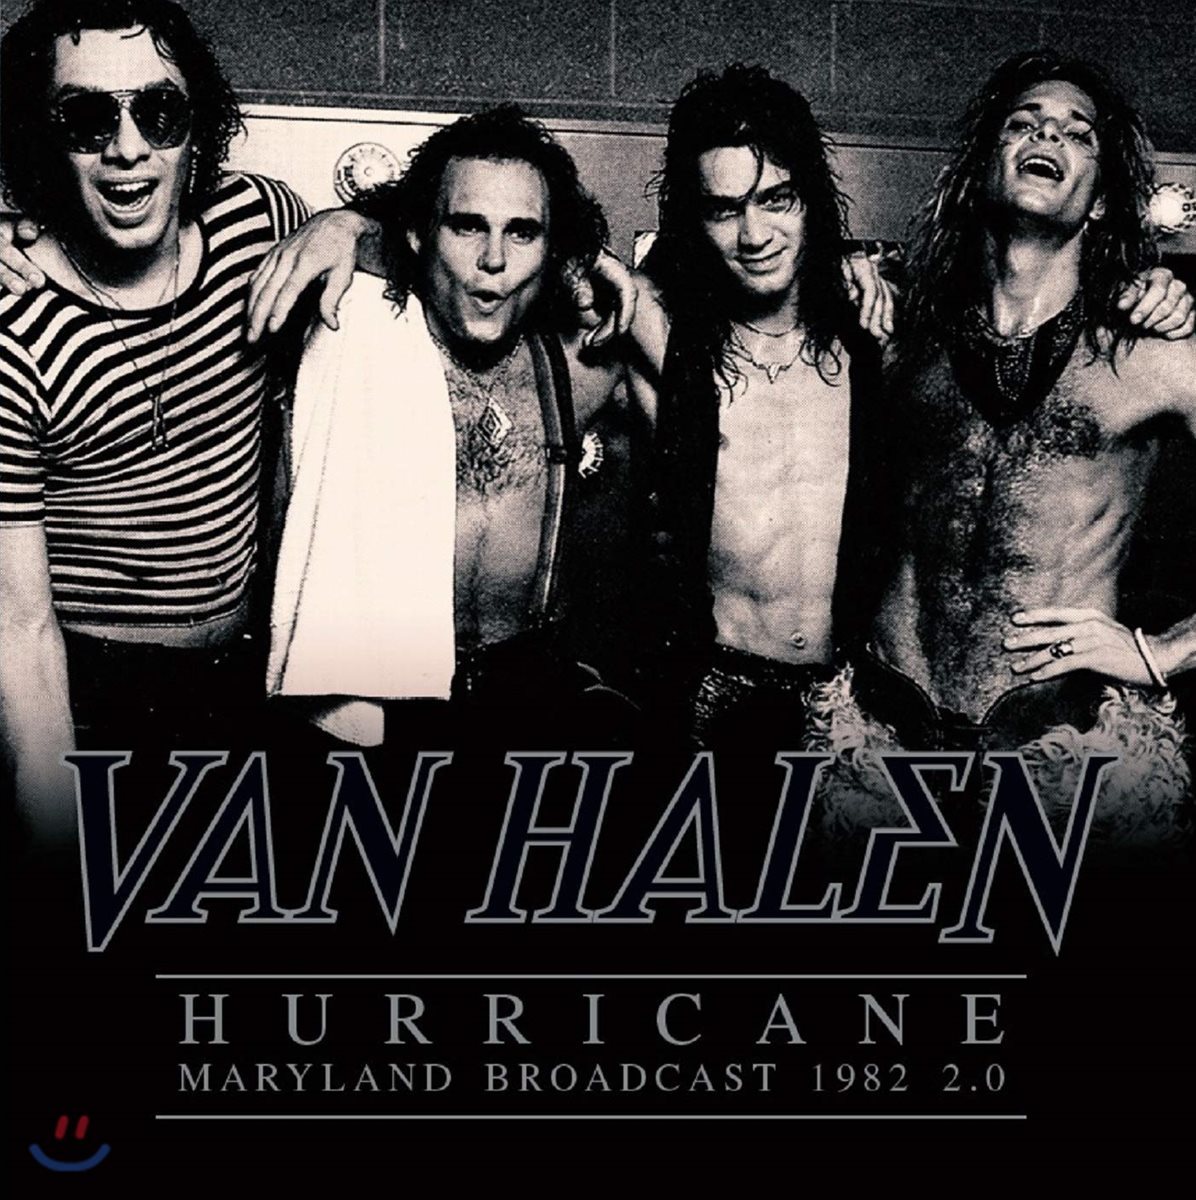 Van halen (반 헤일런) - Hurricane: Maryland Broadcast 1982 2.0 [투명 컬러 2LP]